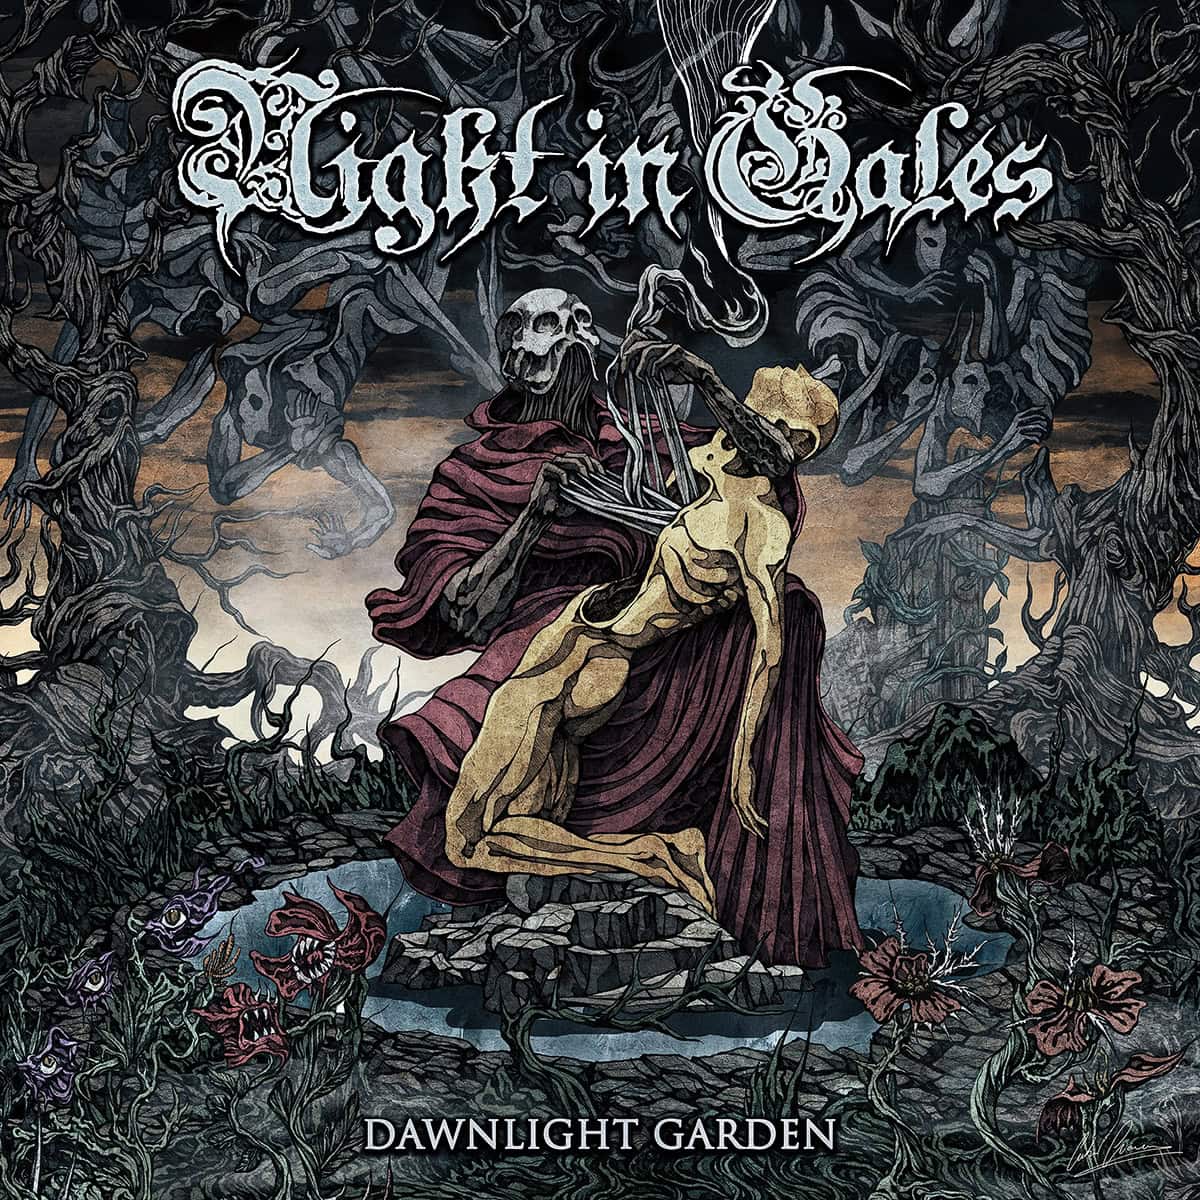 Night-in-gales-_DawnlightGarden_cover-album